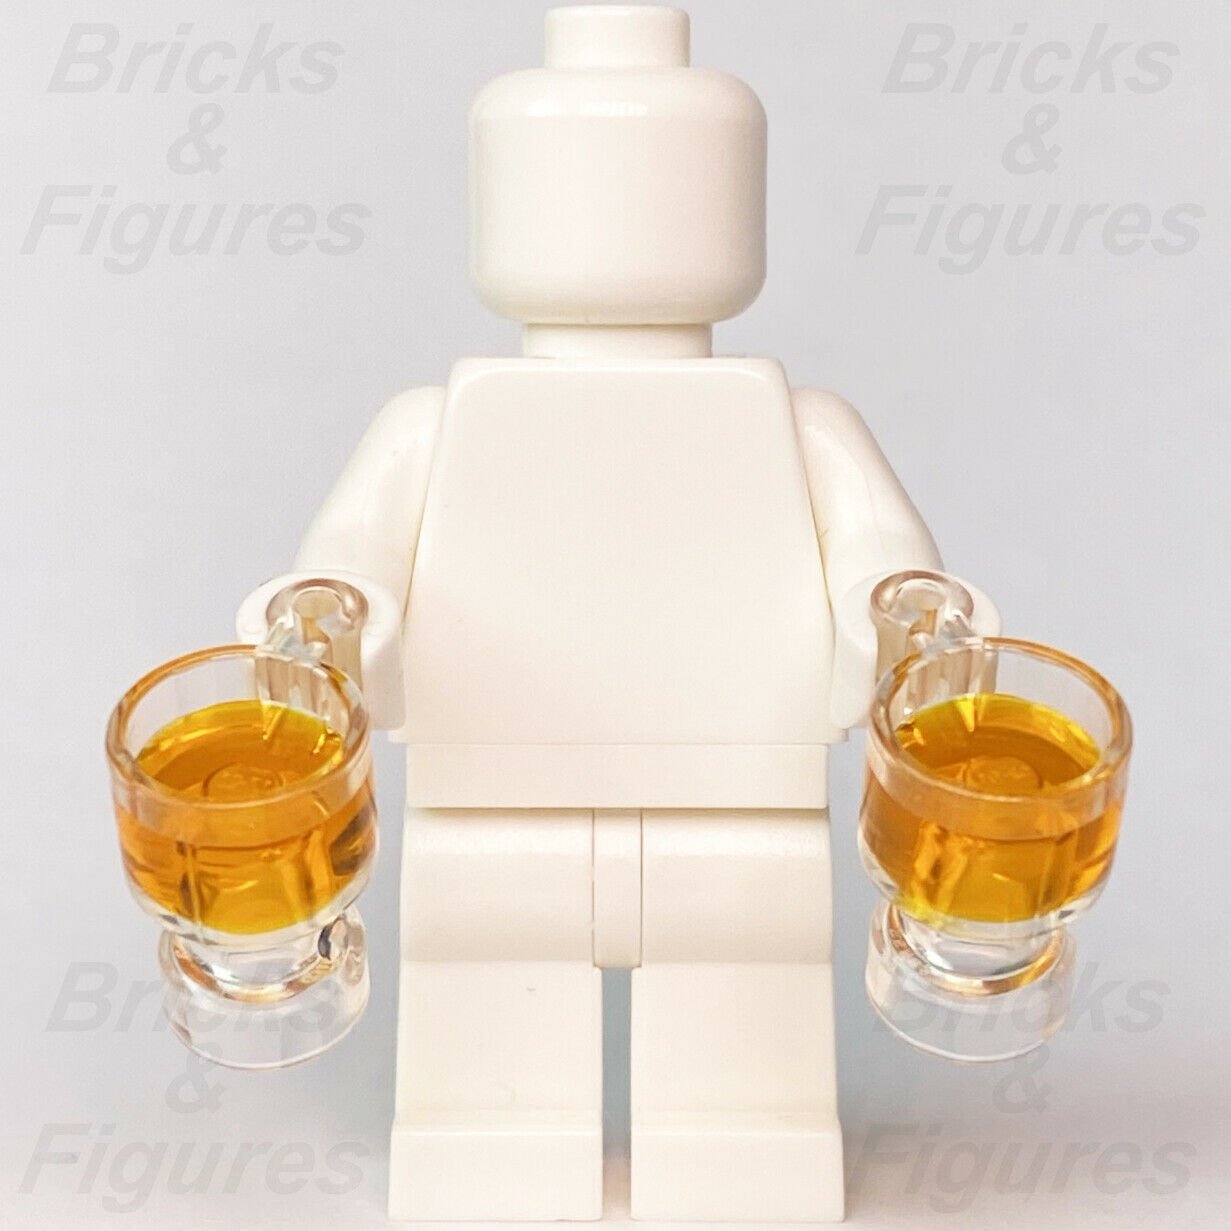 2 x Harry Potter LEGO Stein Cup Drink Pattern Orange Minifigure Part 76388 - Bricks & Figures